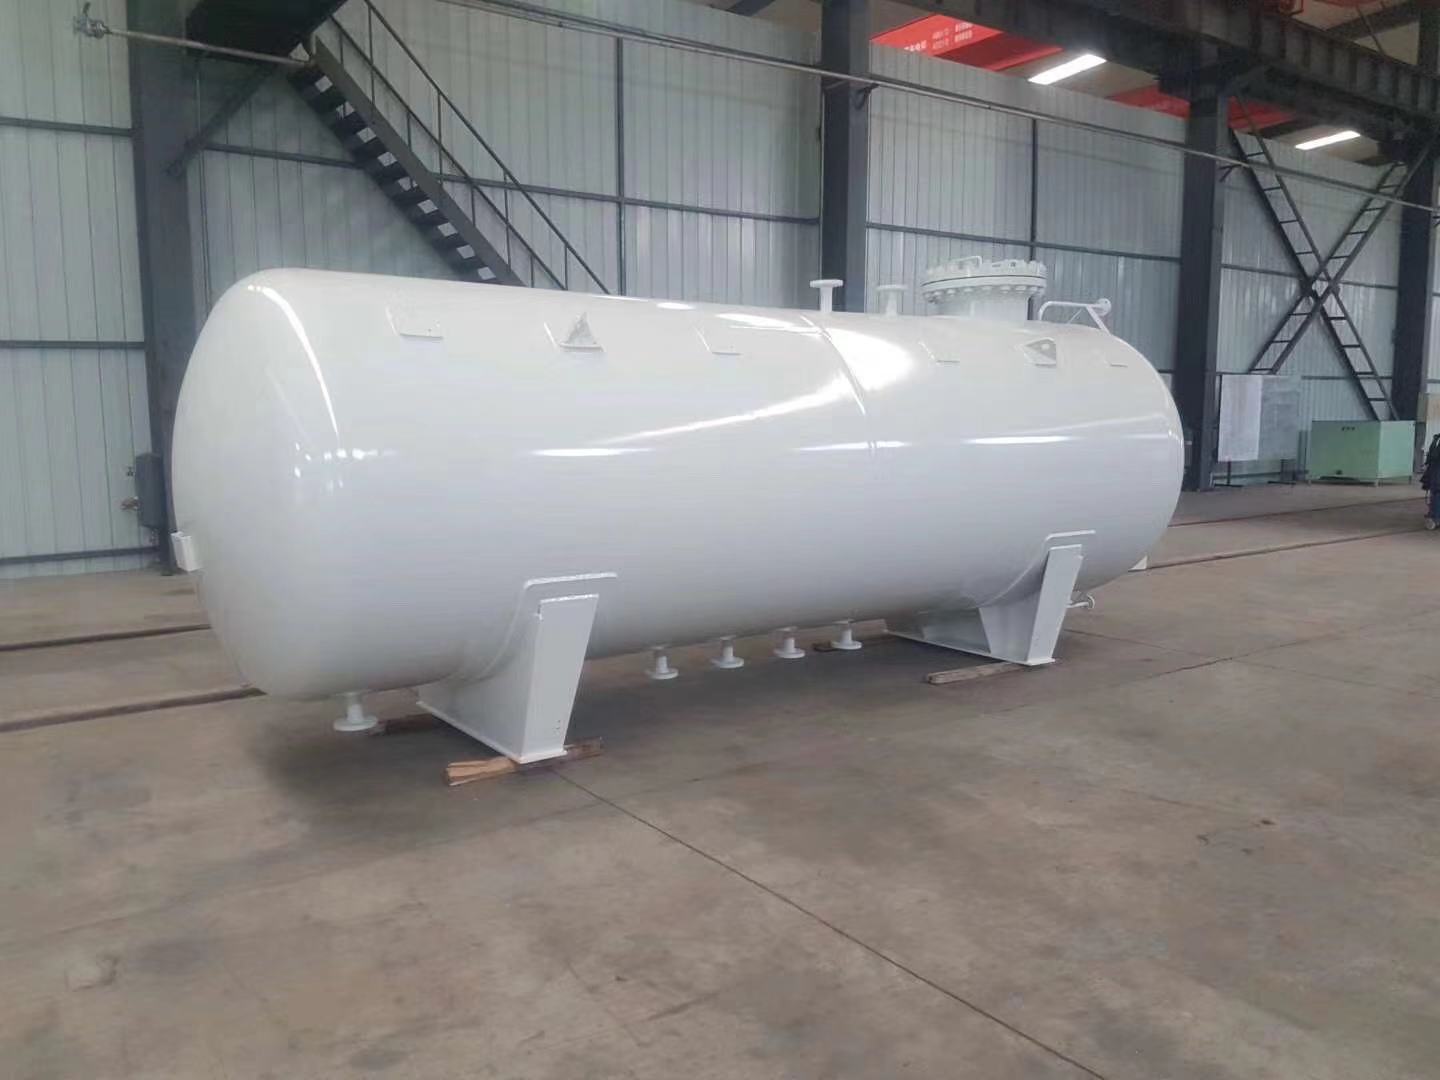 Liquefied gas storage tank inspection test